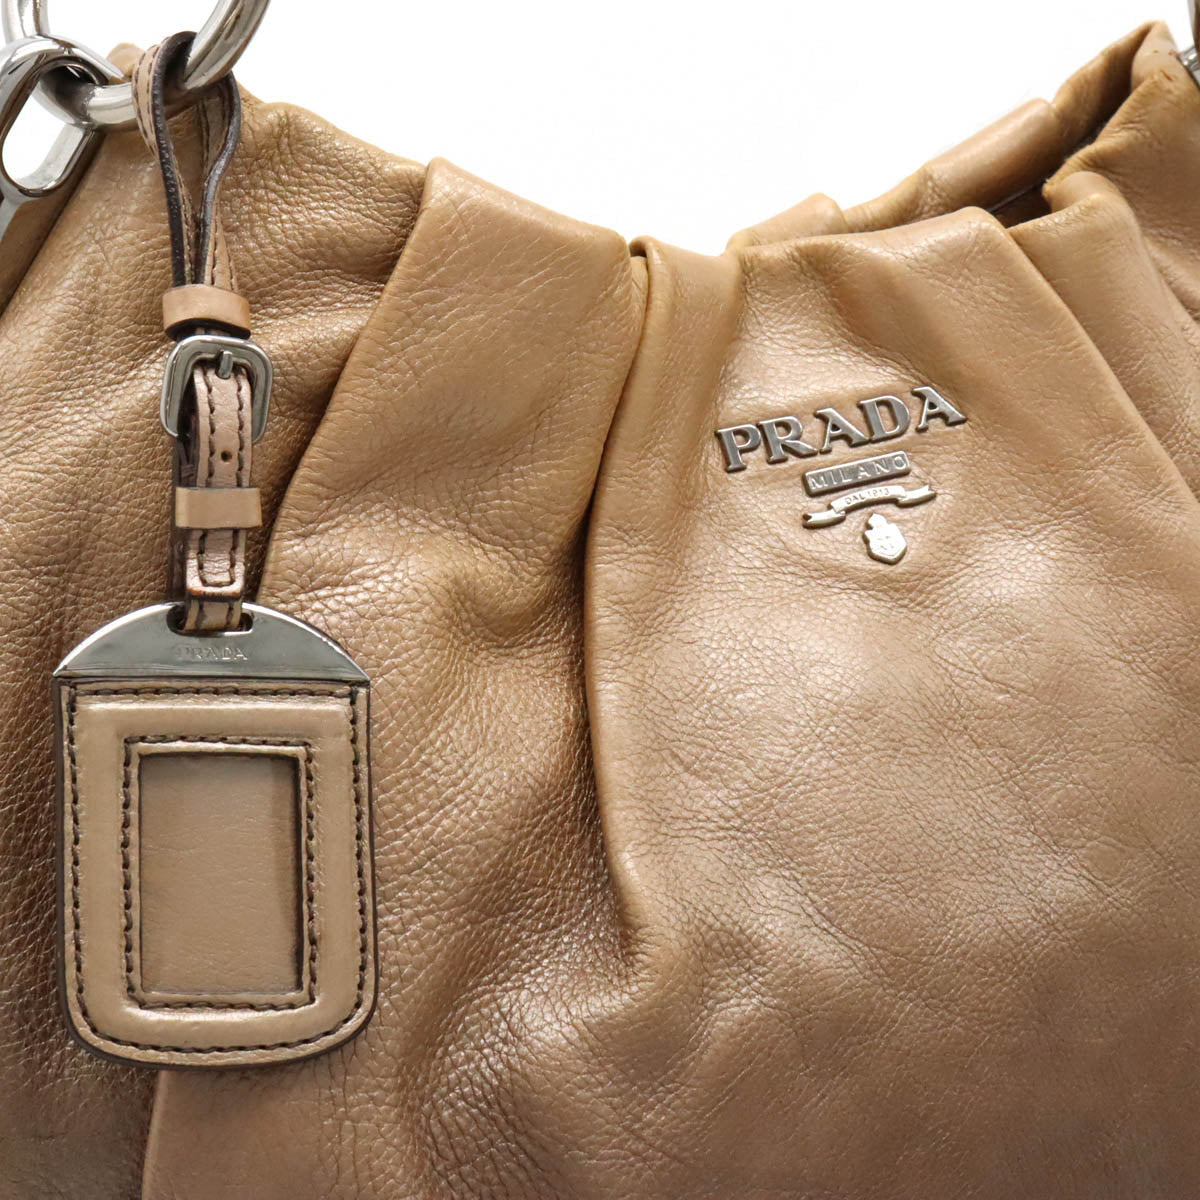 PRADA PRADA GLACE ZIPPERS Shoulder Bag One Shoulder Degradation Leather Pearl Pink Beach Bronze Silver  Blumin